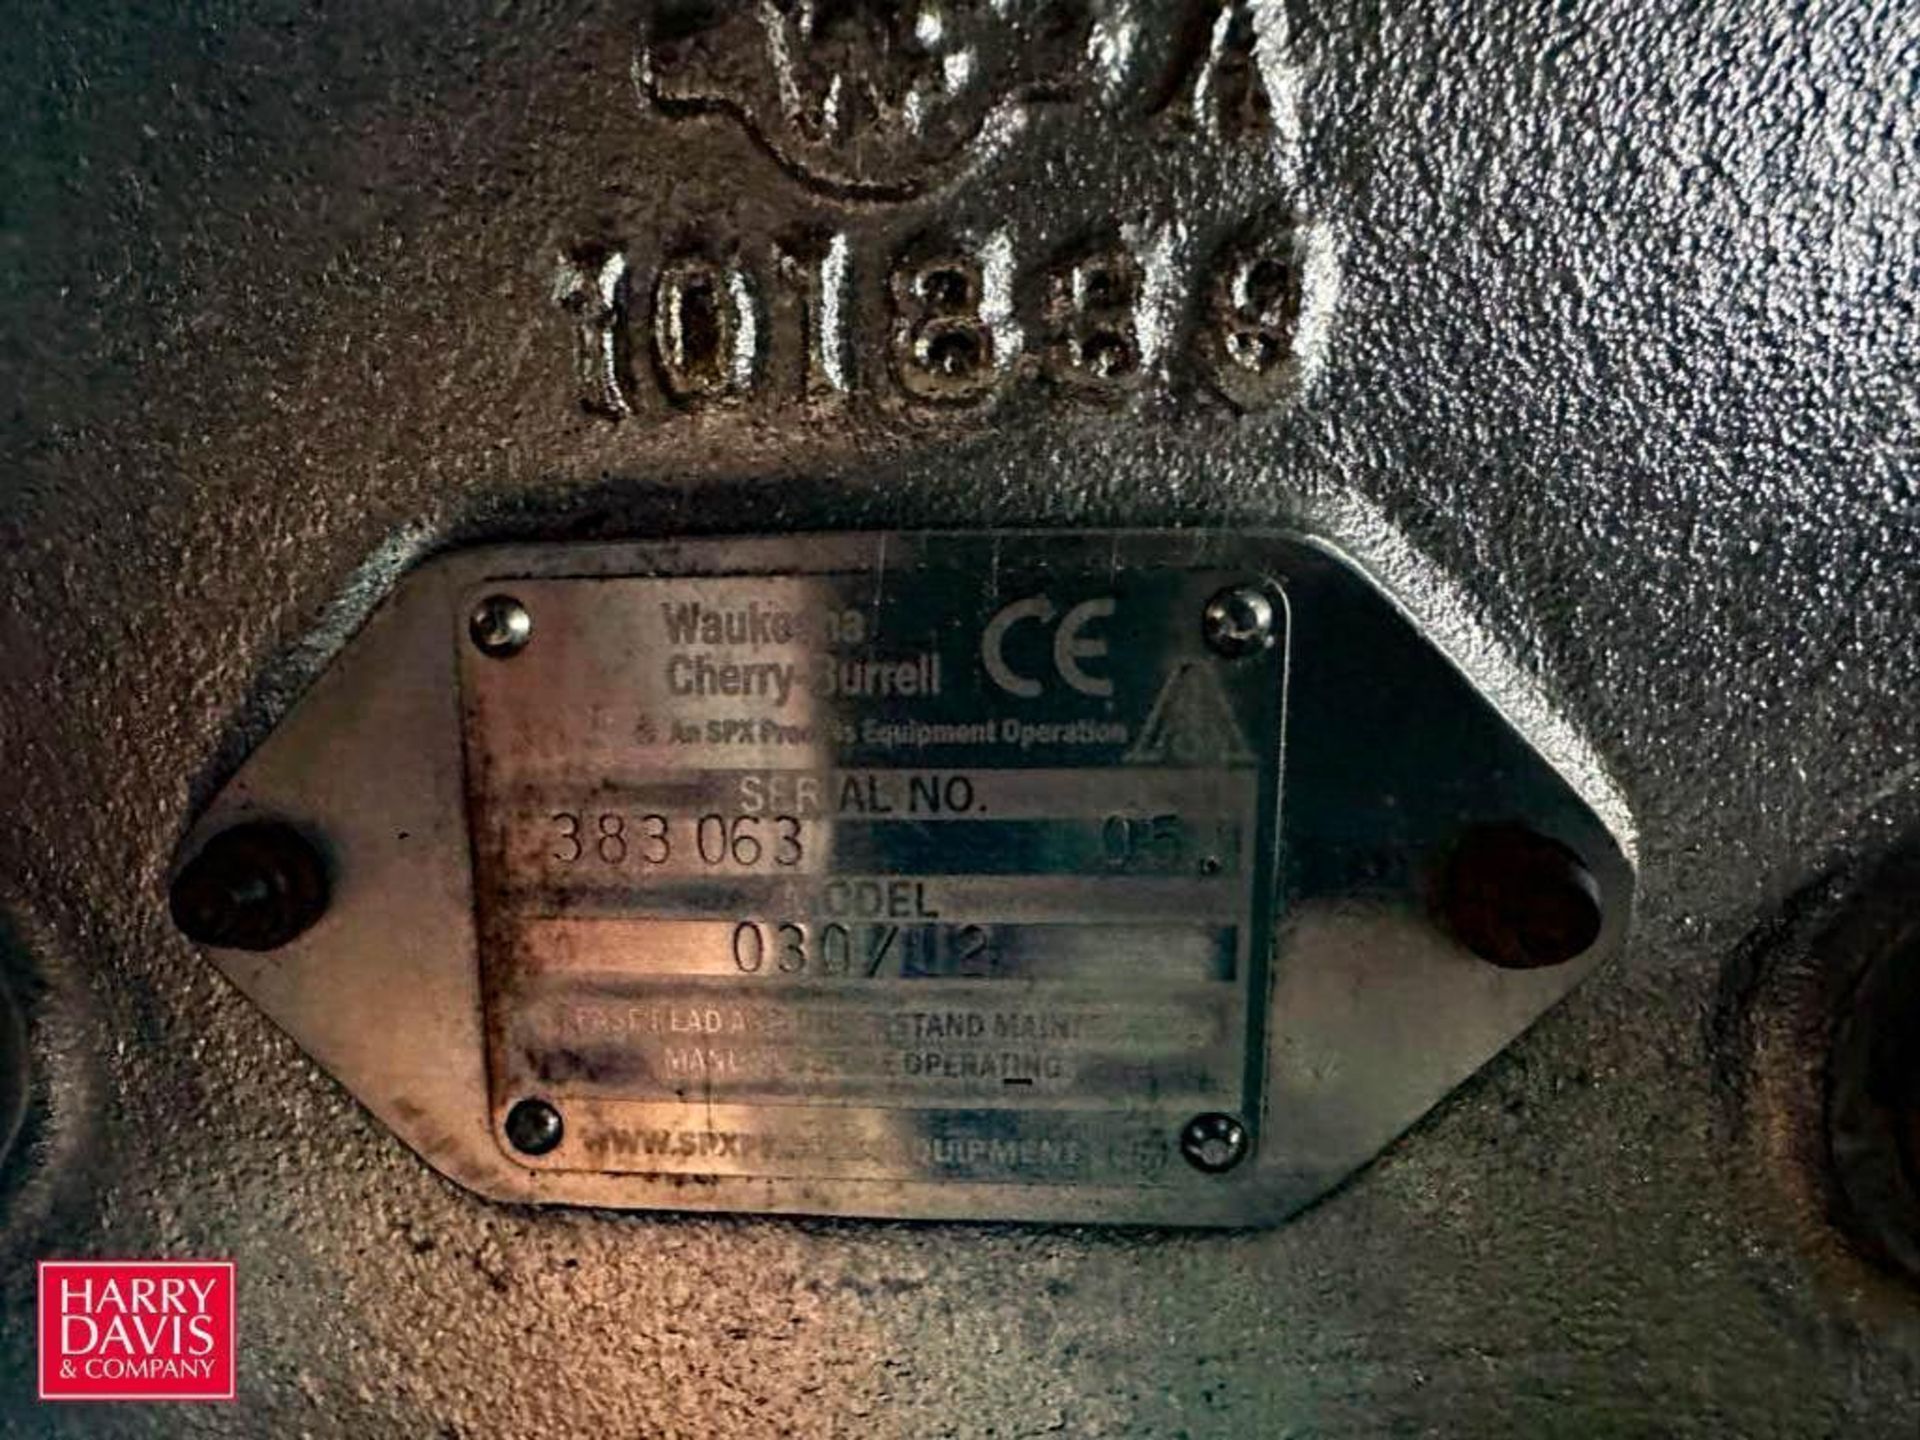 Waukesha Cherry-Burrell Positive Displacement Pump, Model: 030/U2, S/N: 35306305: Mounted on S/S - Image 2 of 3